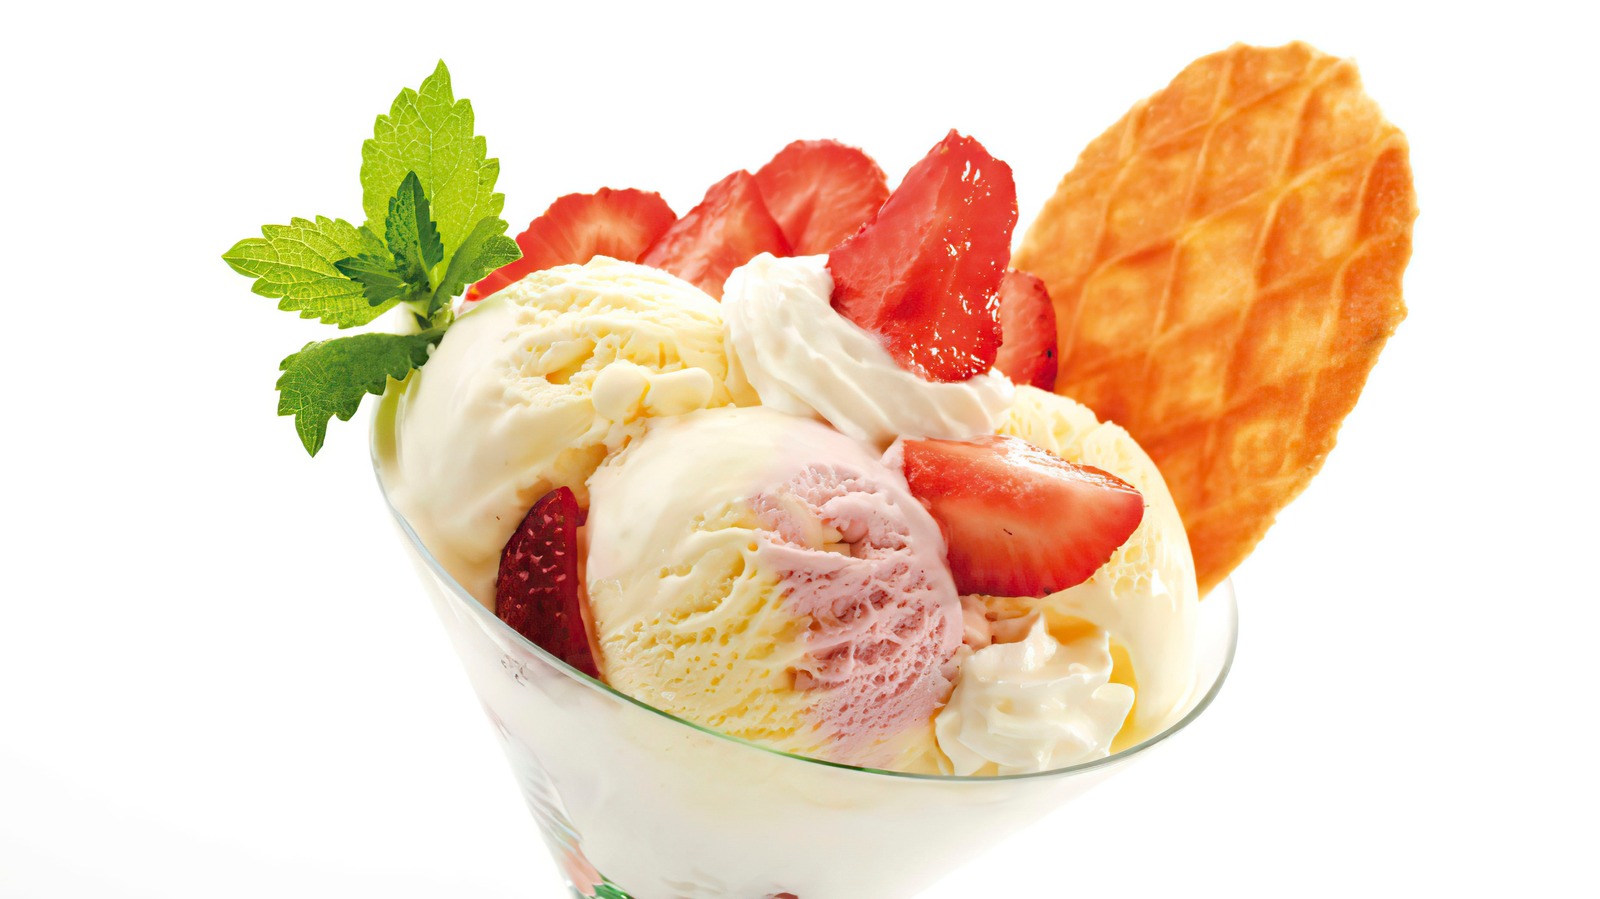 25 Best Ice Cream Brands Ranked